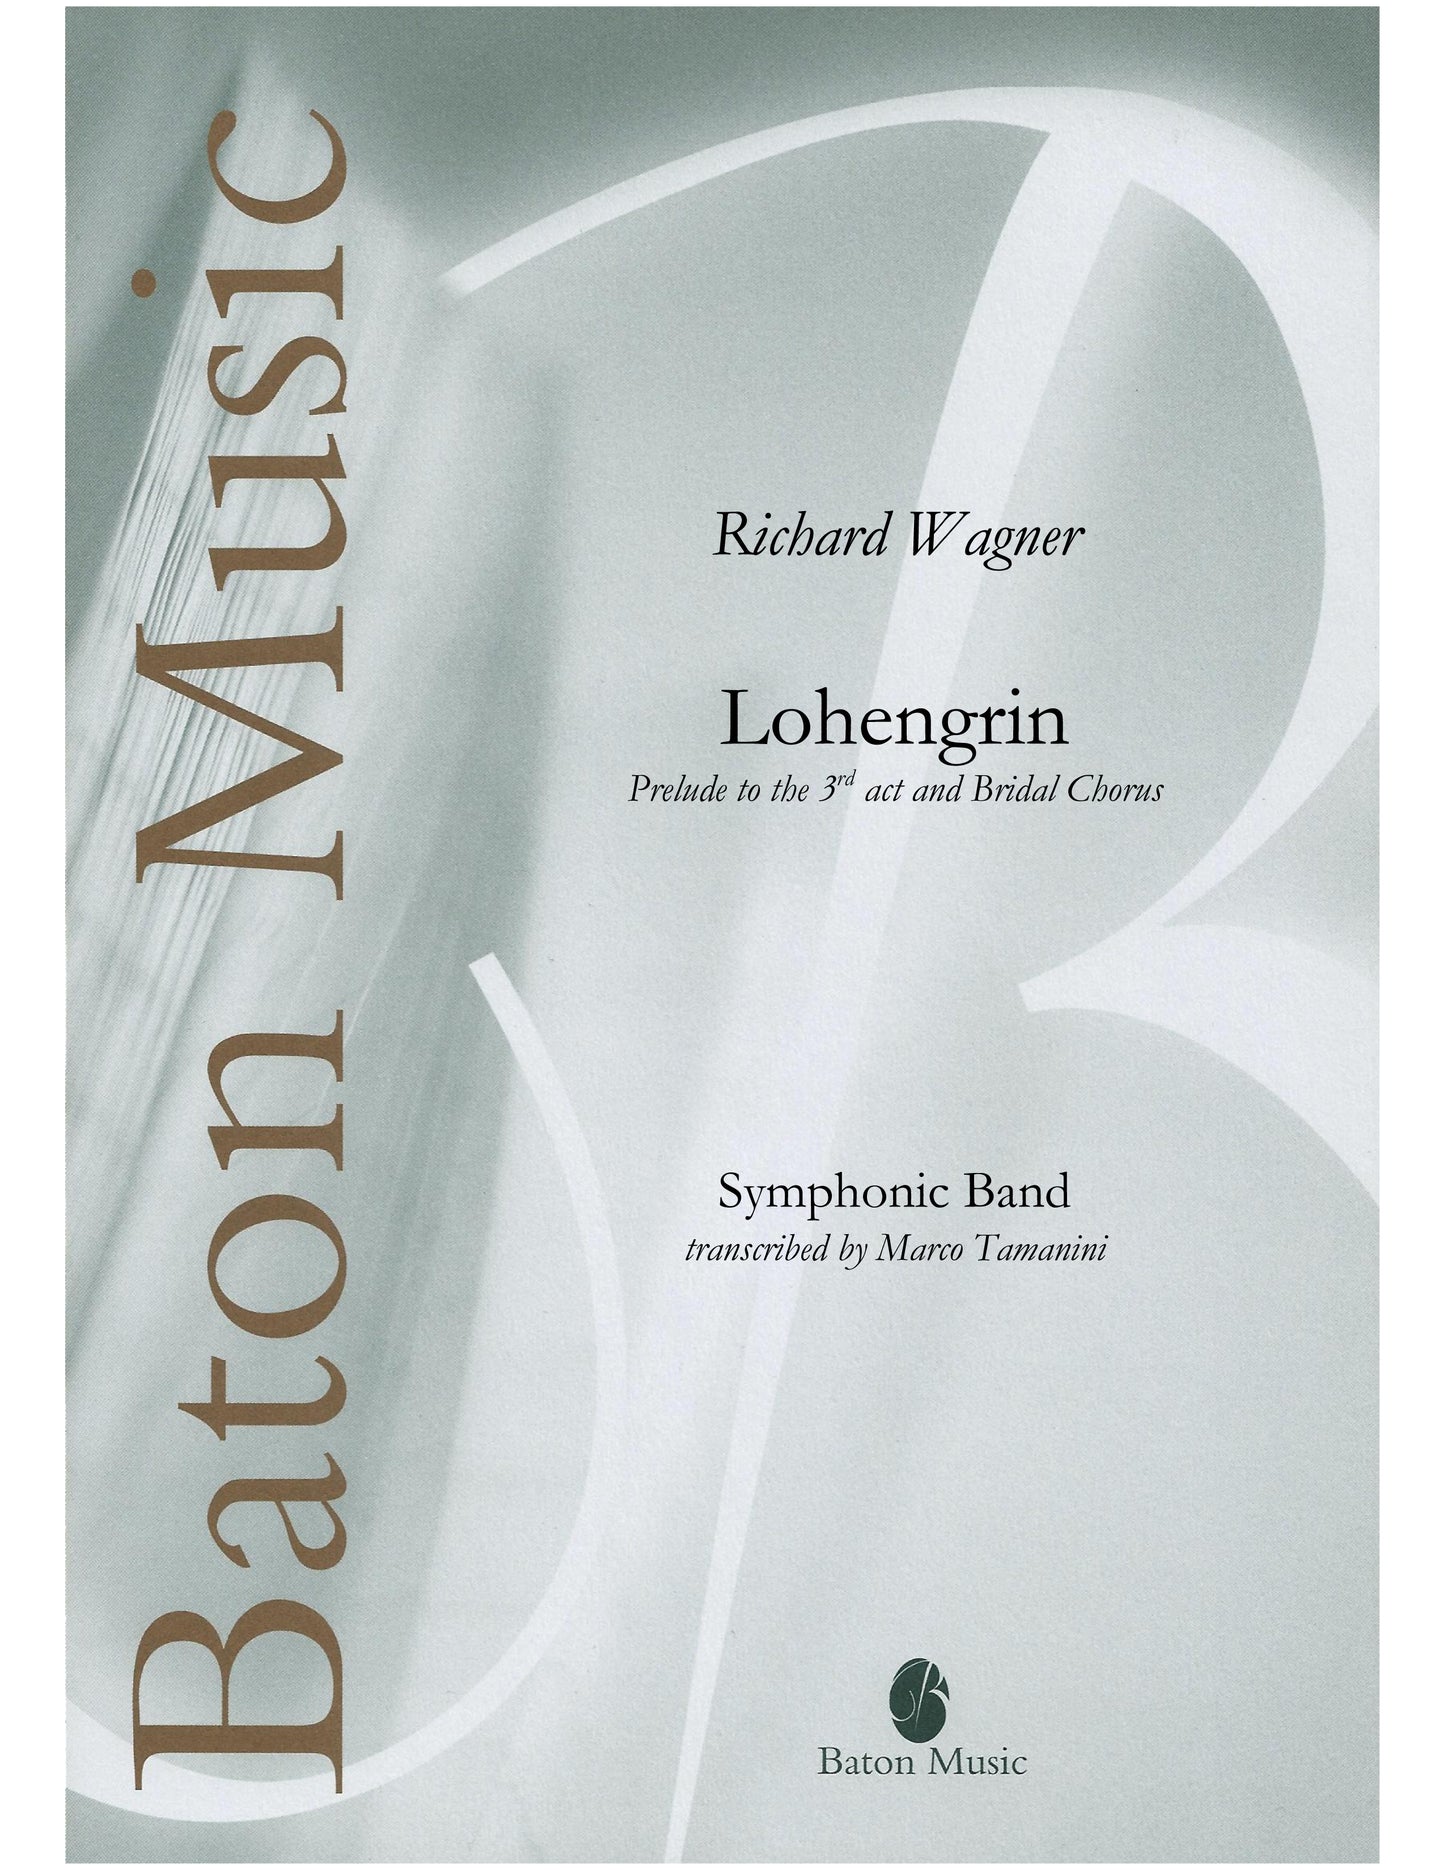 Lohengrin (Prelude to Act III and Bridal Chorus) - Richard Wagner